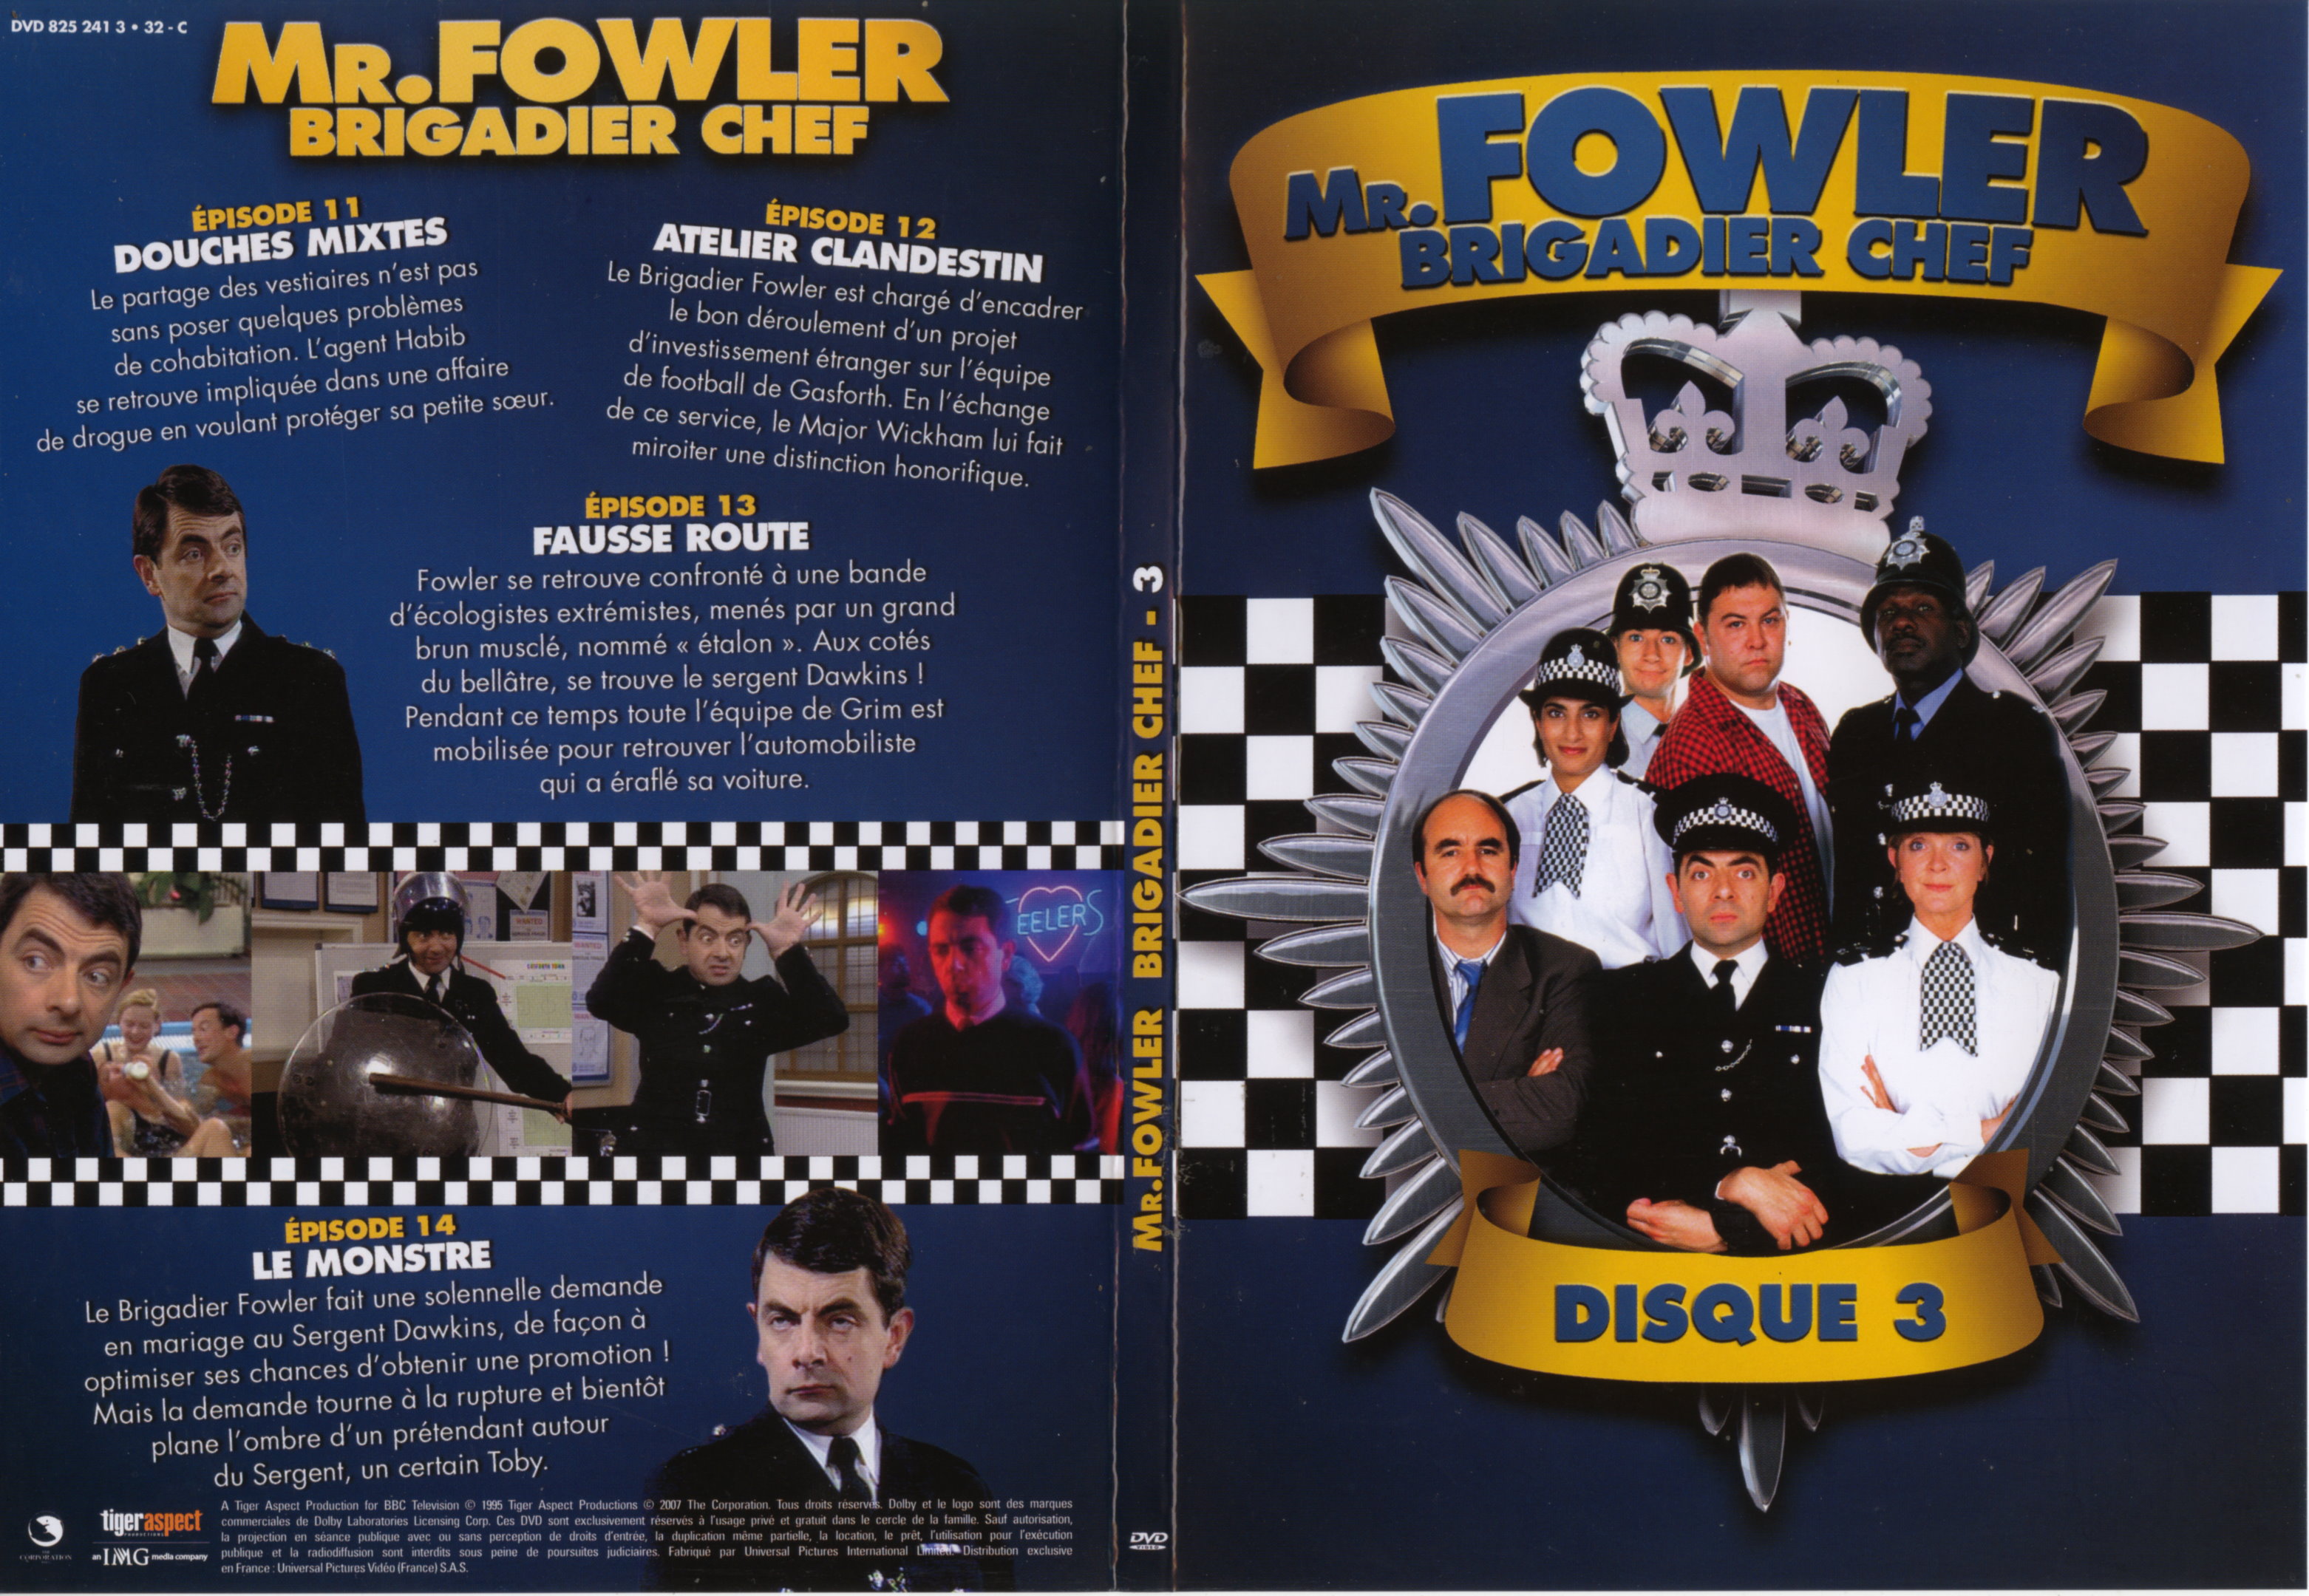 Jaquette DVD Mr Fowler brigadier chef DVD 3